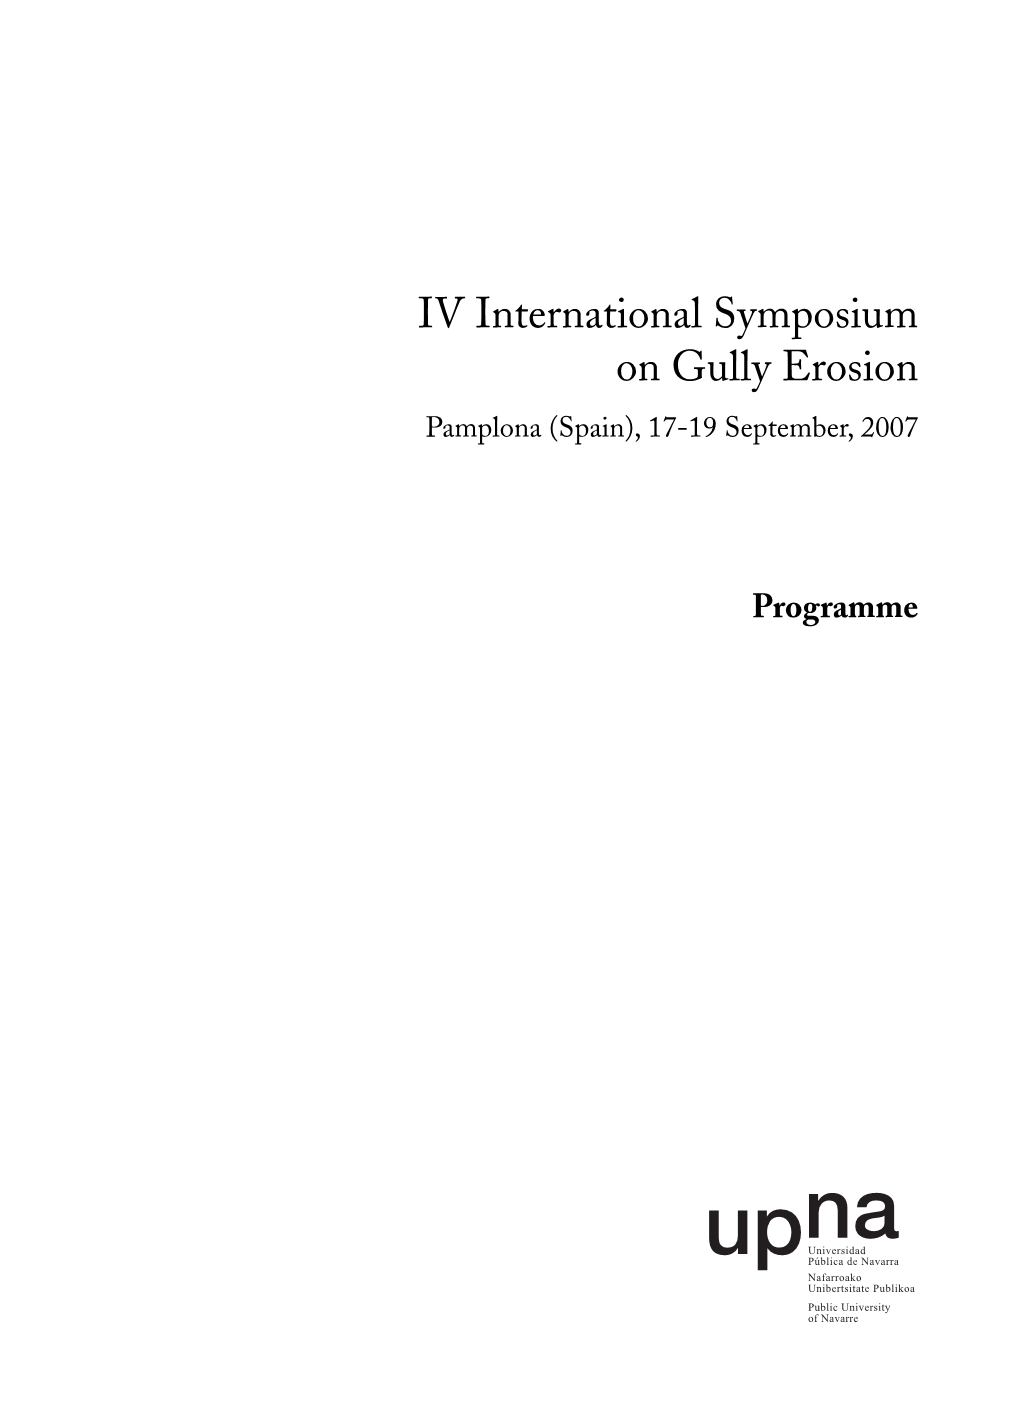 IV International Symposium on Gully Erosion Pamplona (Spain), 17-19 September, 2007